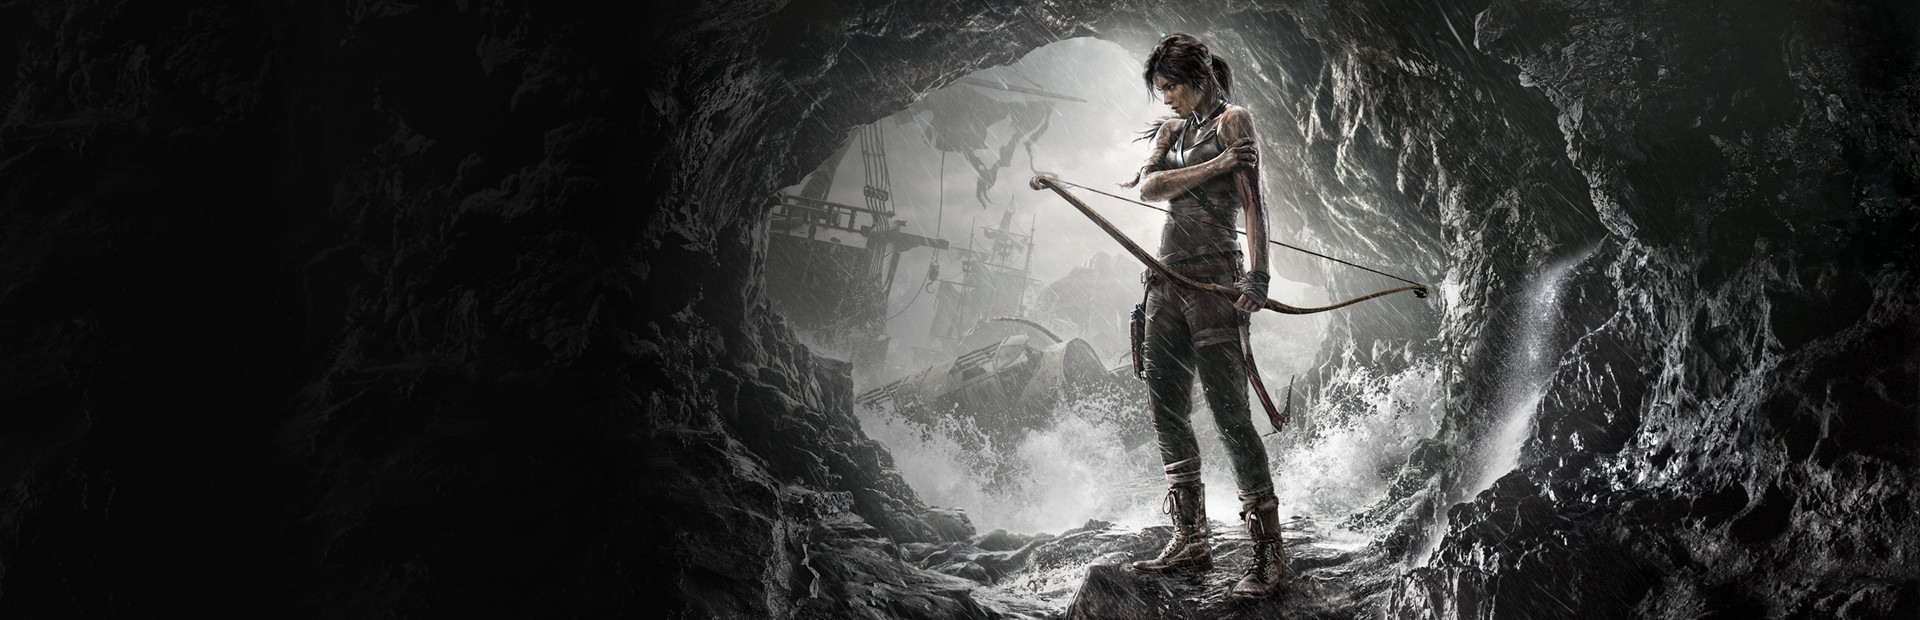 Tomb Raider cover image